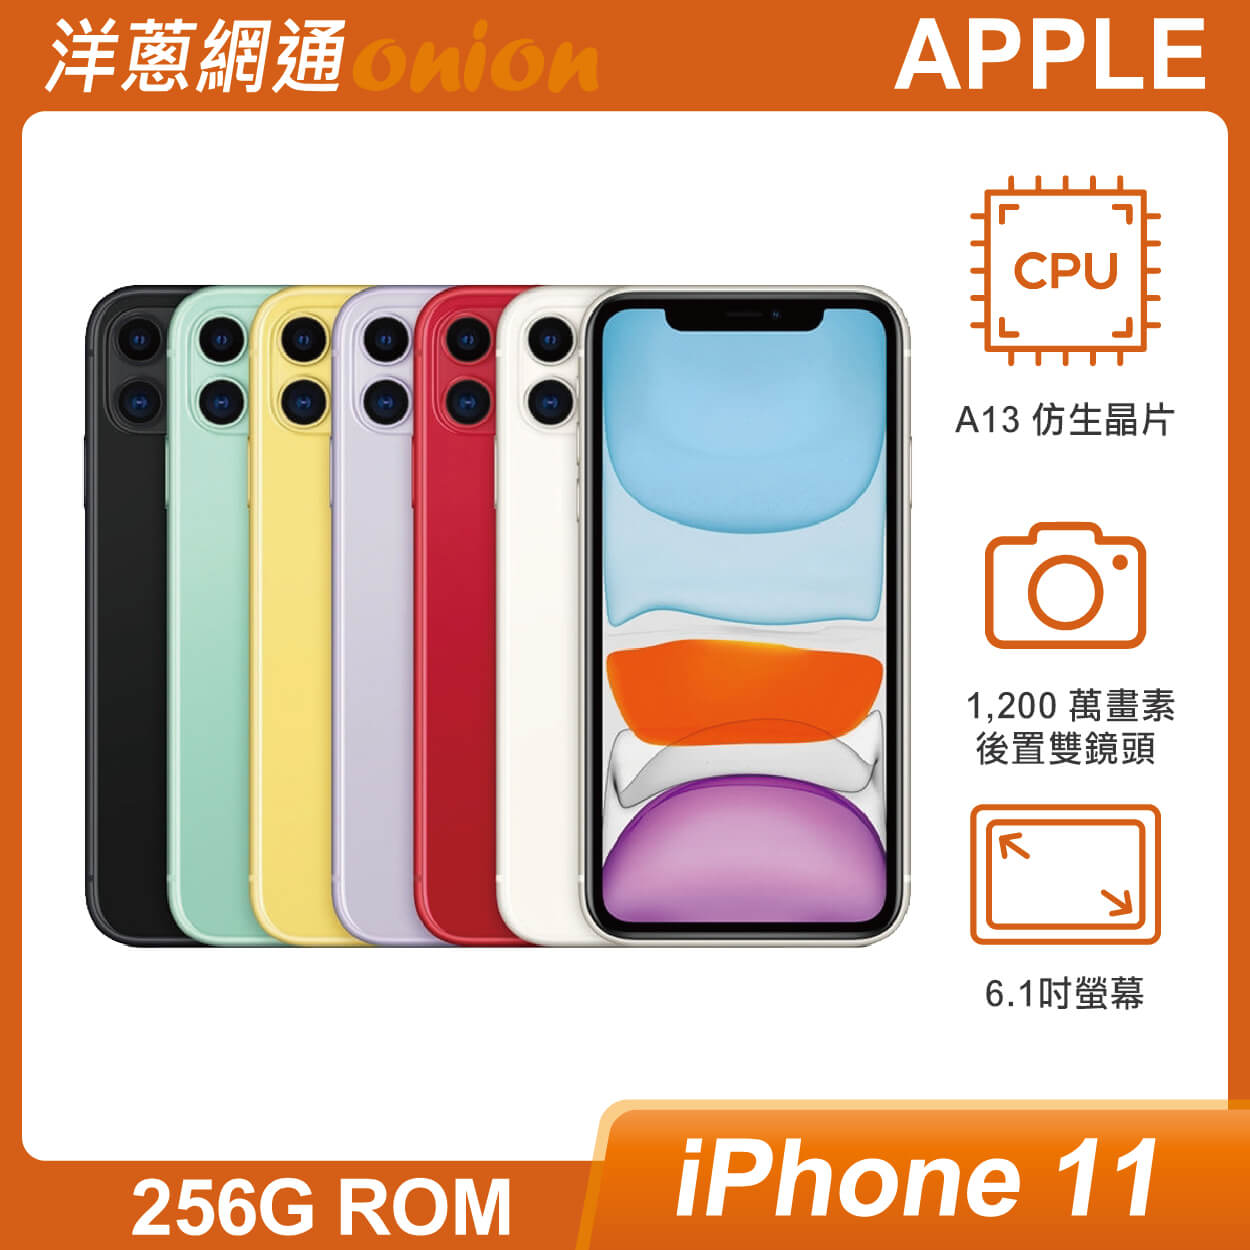 Apple iPhone 11 256G